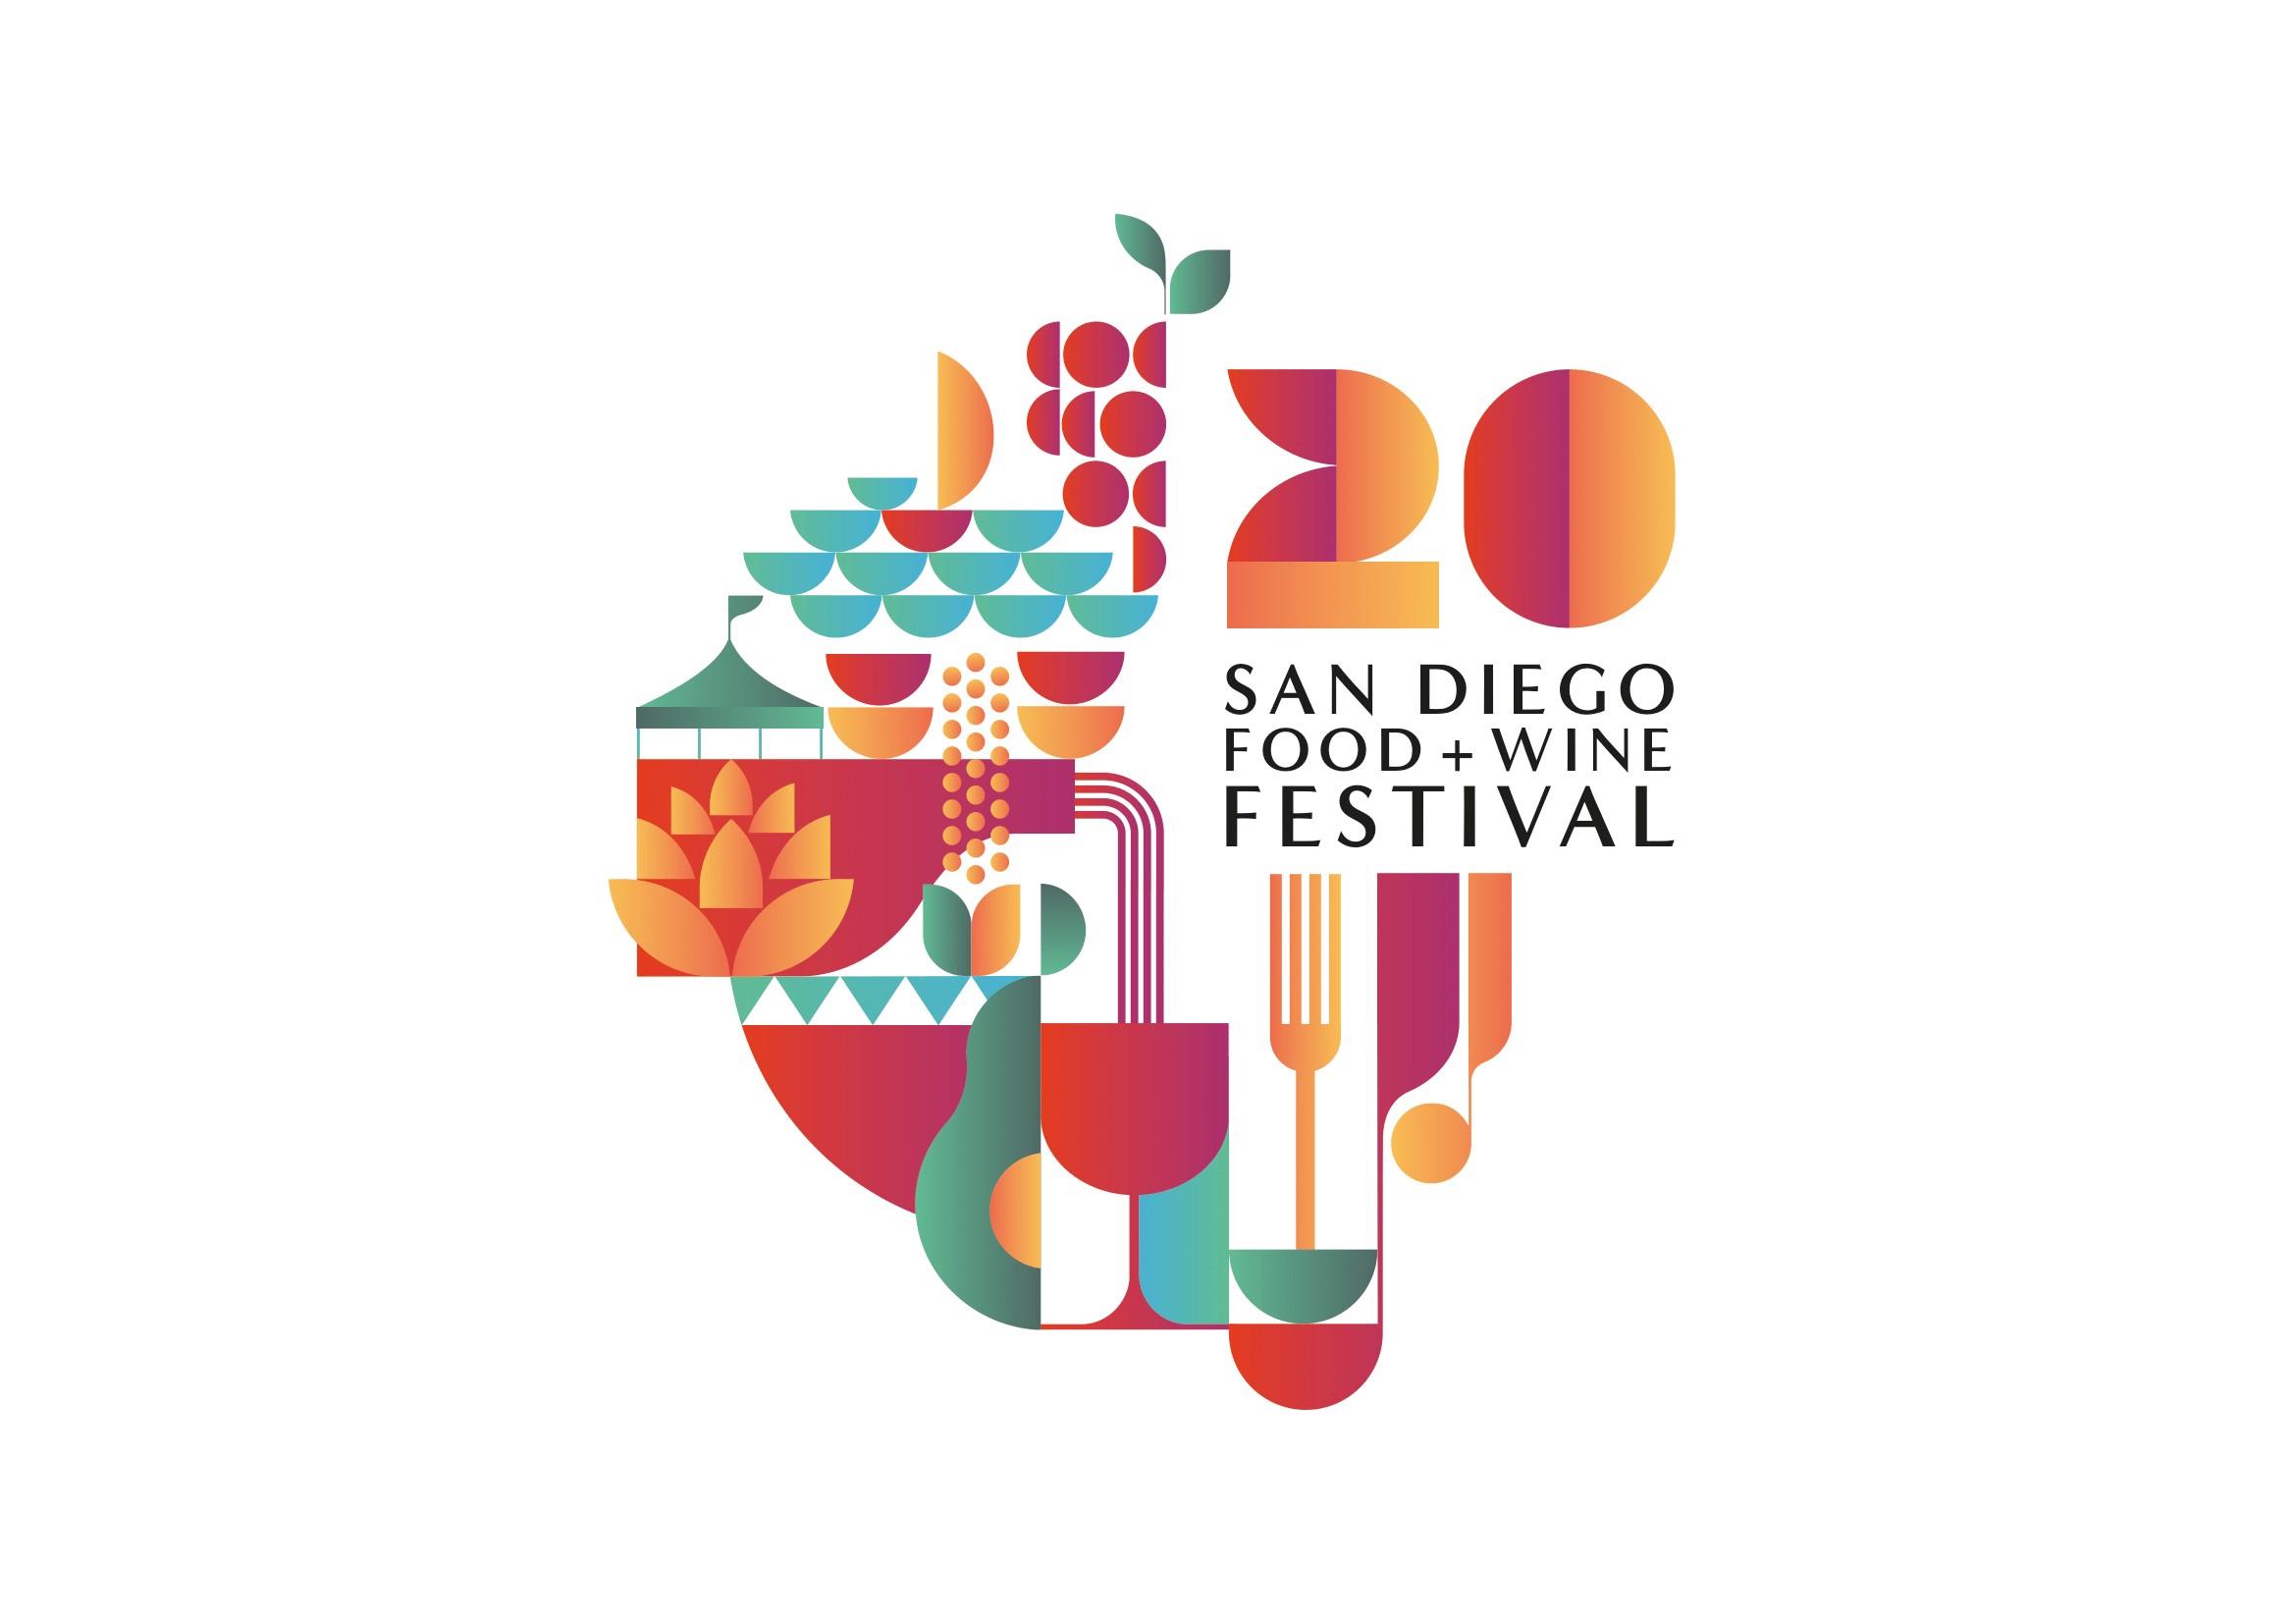 San Diego Food + Wine Festival